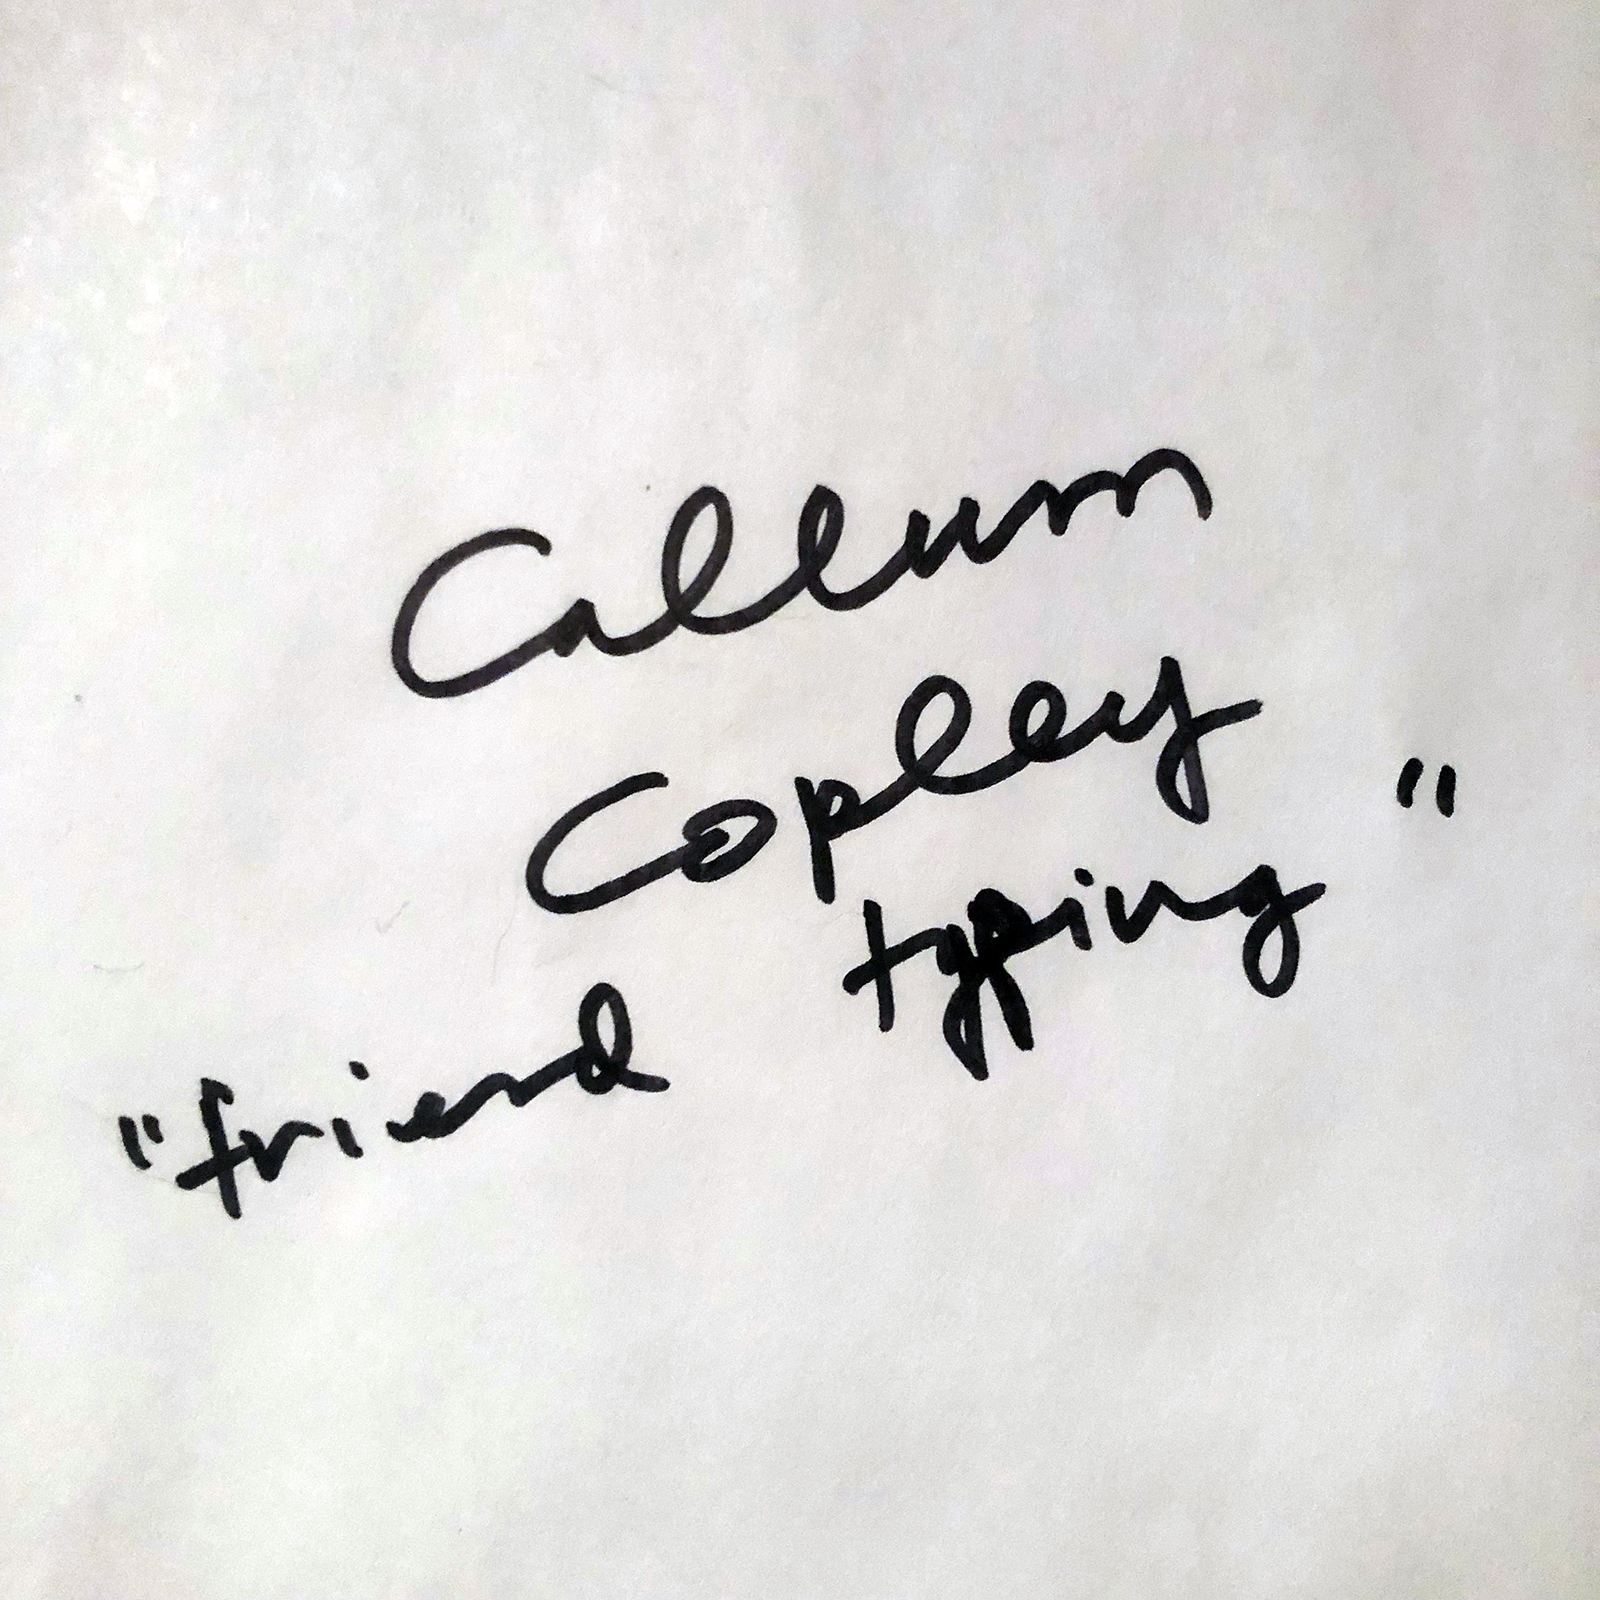 Callum Copley, A Friend Is Typing